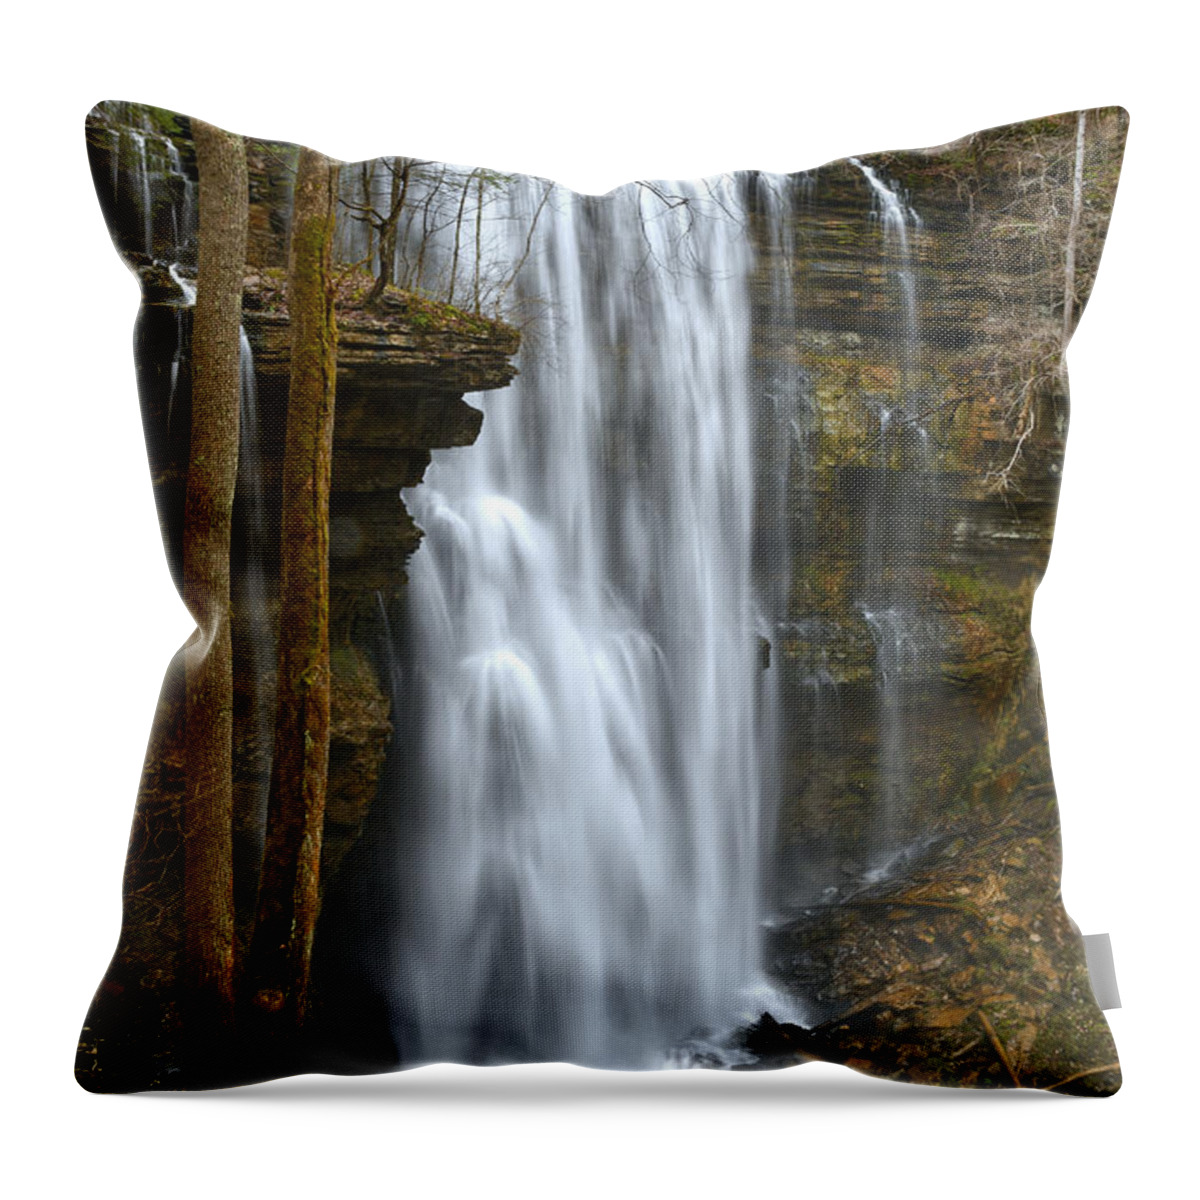 Virgin Falls Throw Pillow featuring the photograph Virgin Falls 4 by Phil Perkins